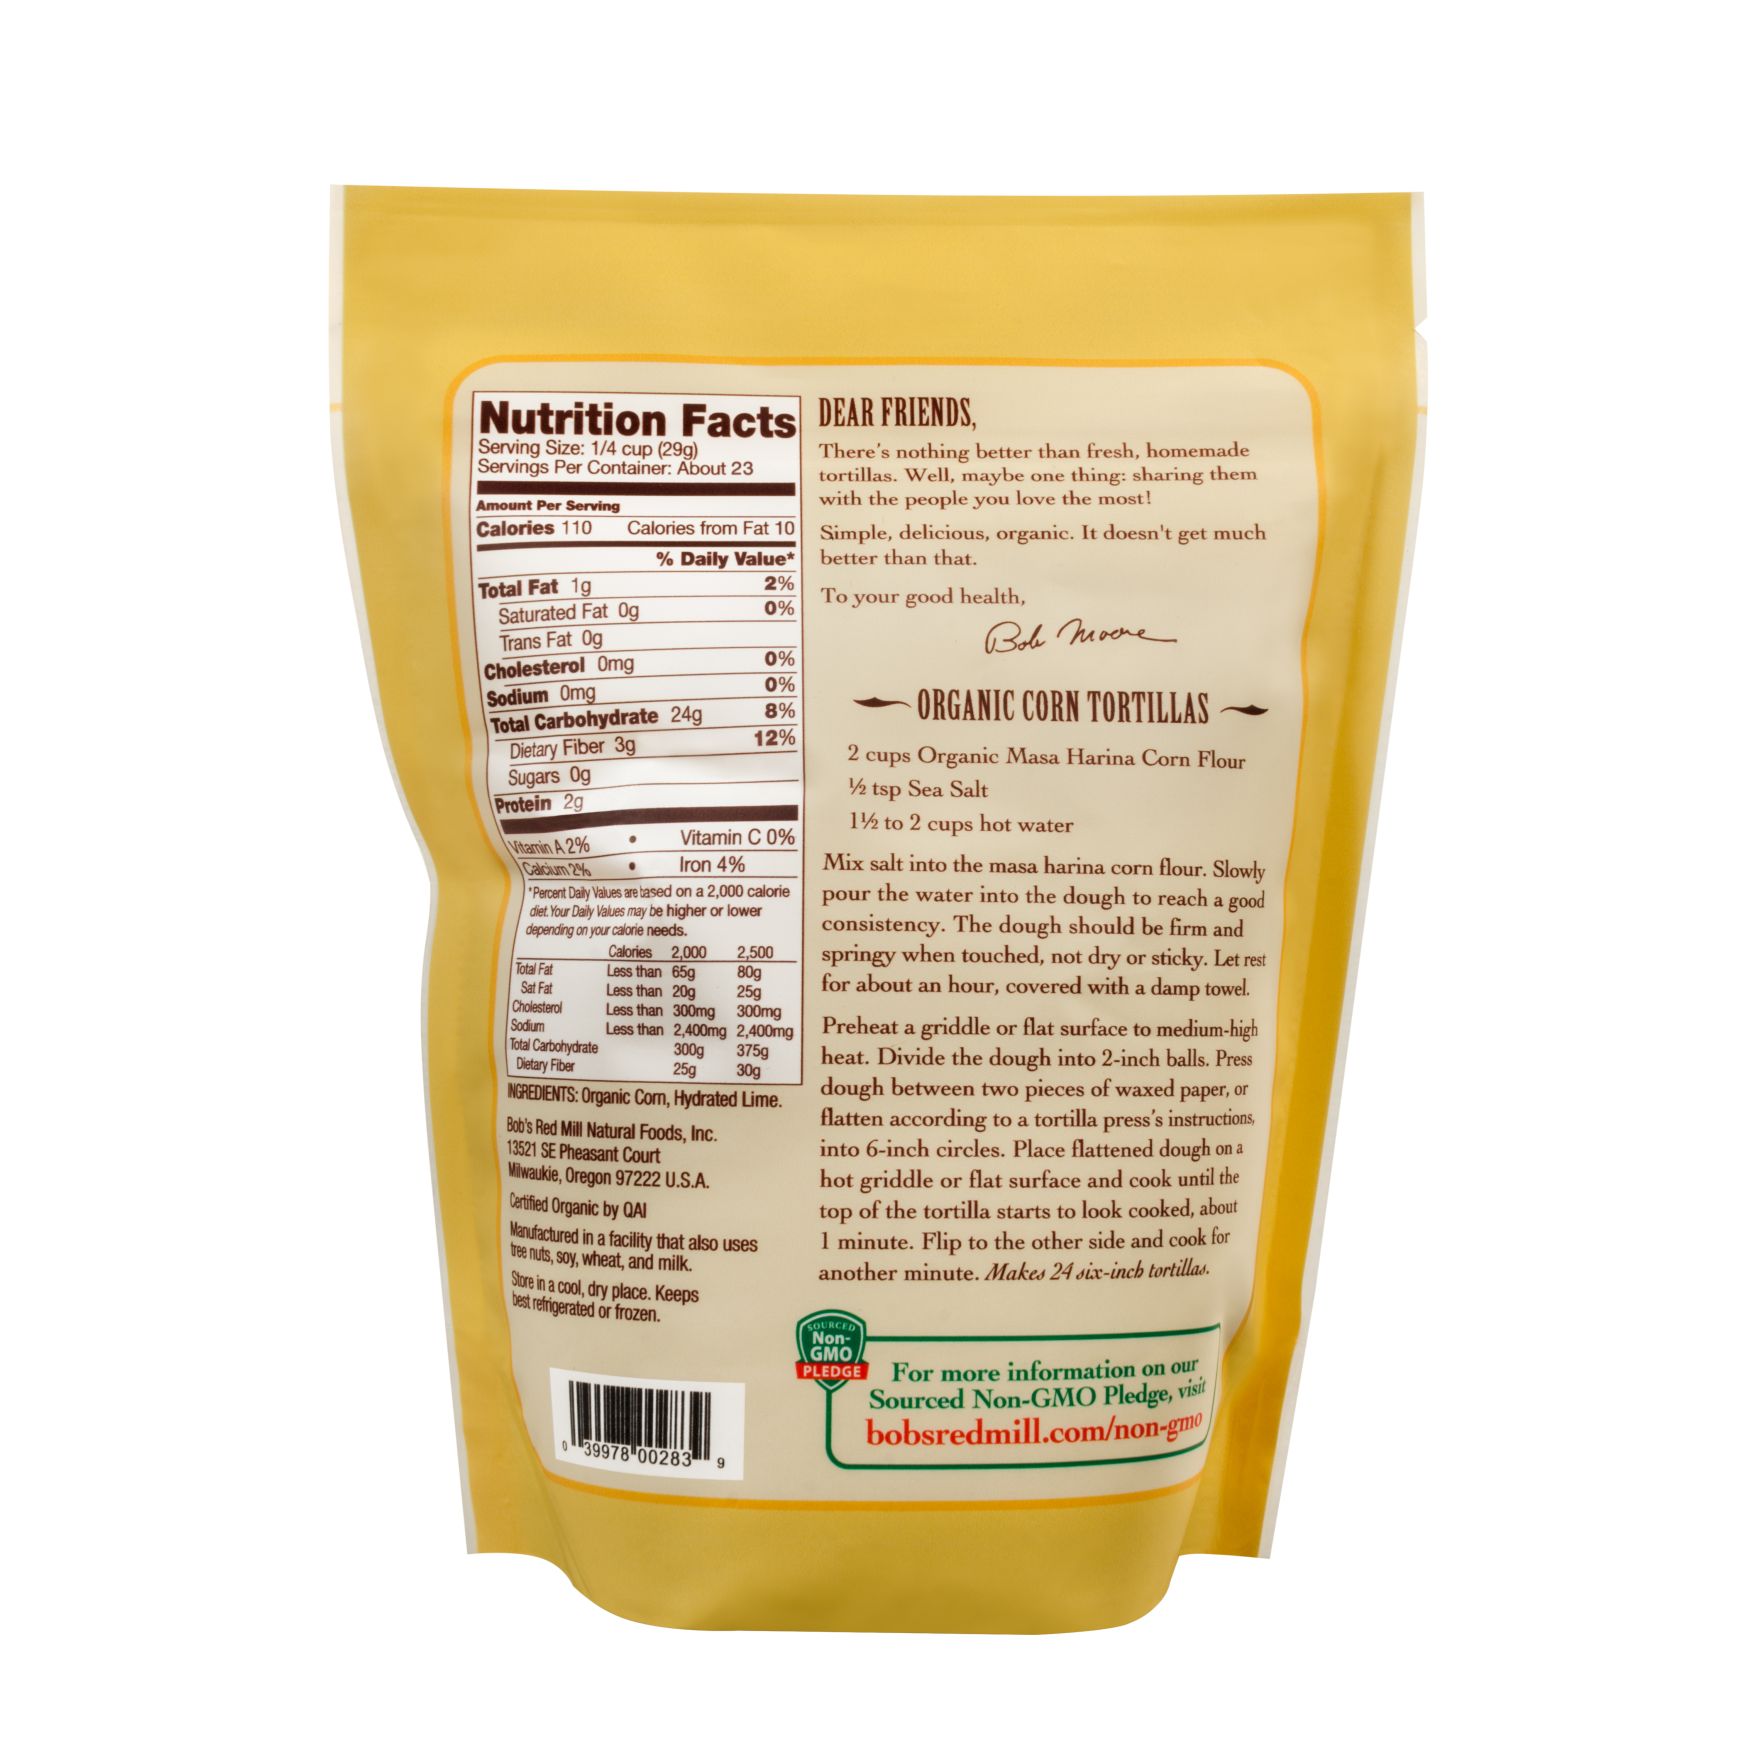 Organic Golden Masa Harina Flour by Bob's Red Mill